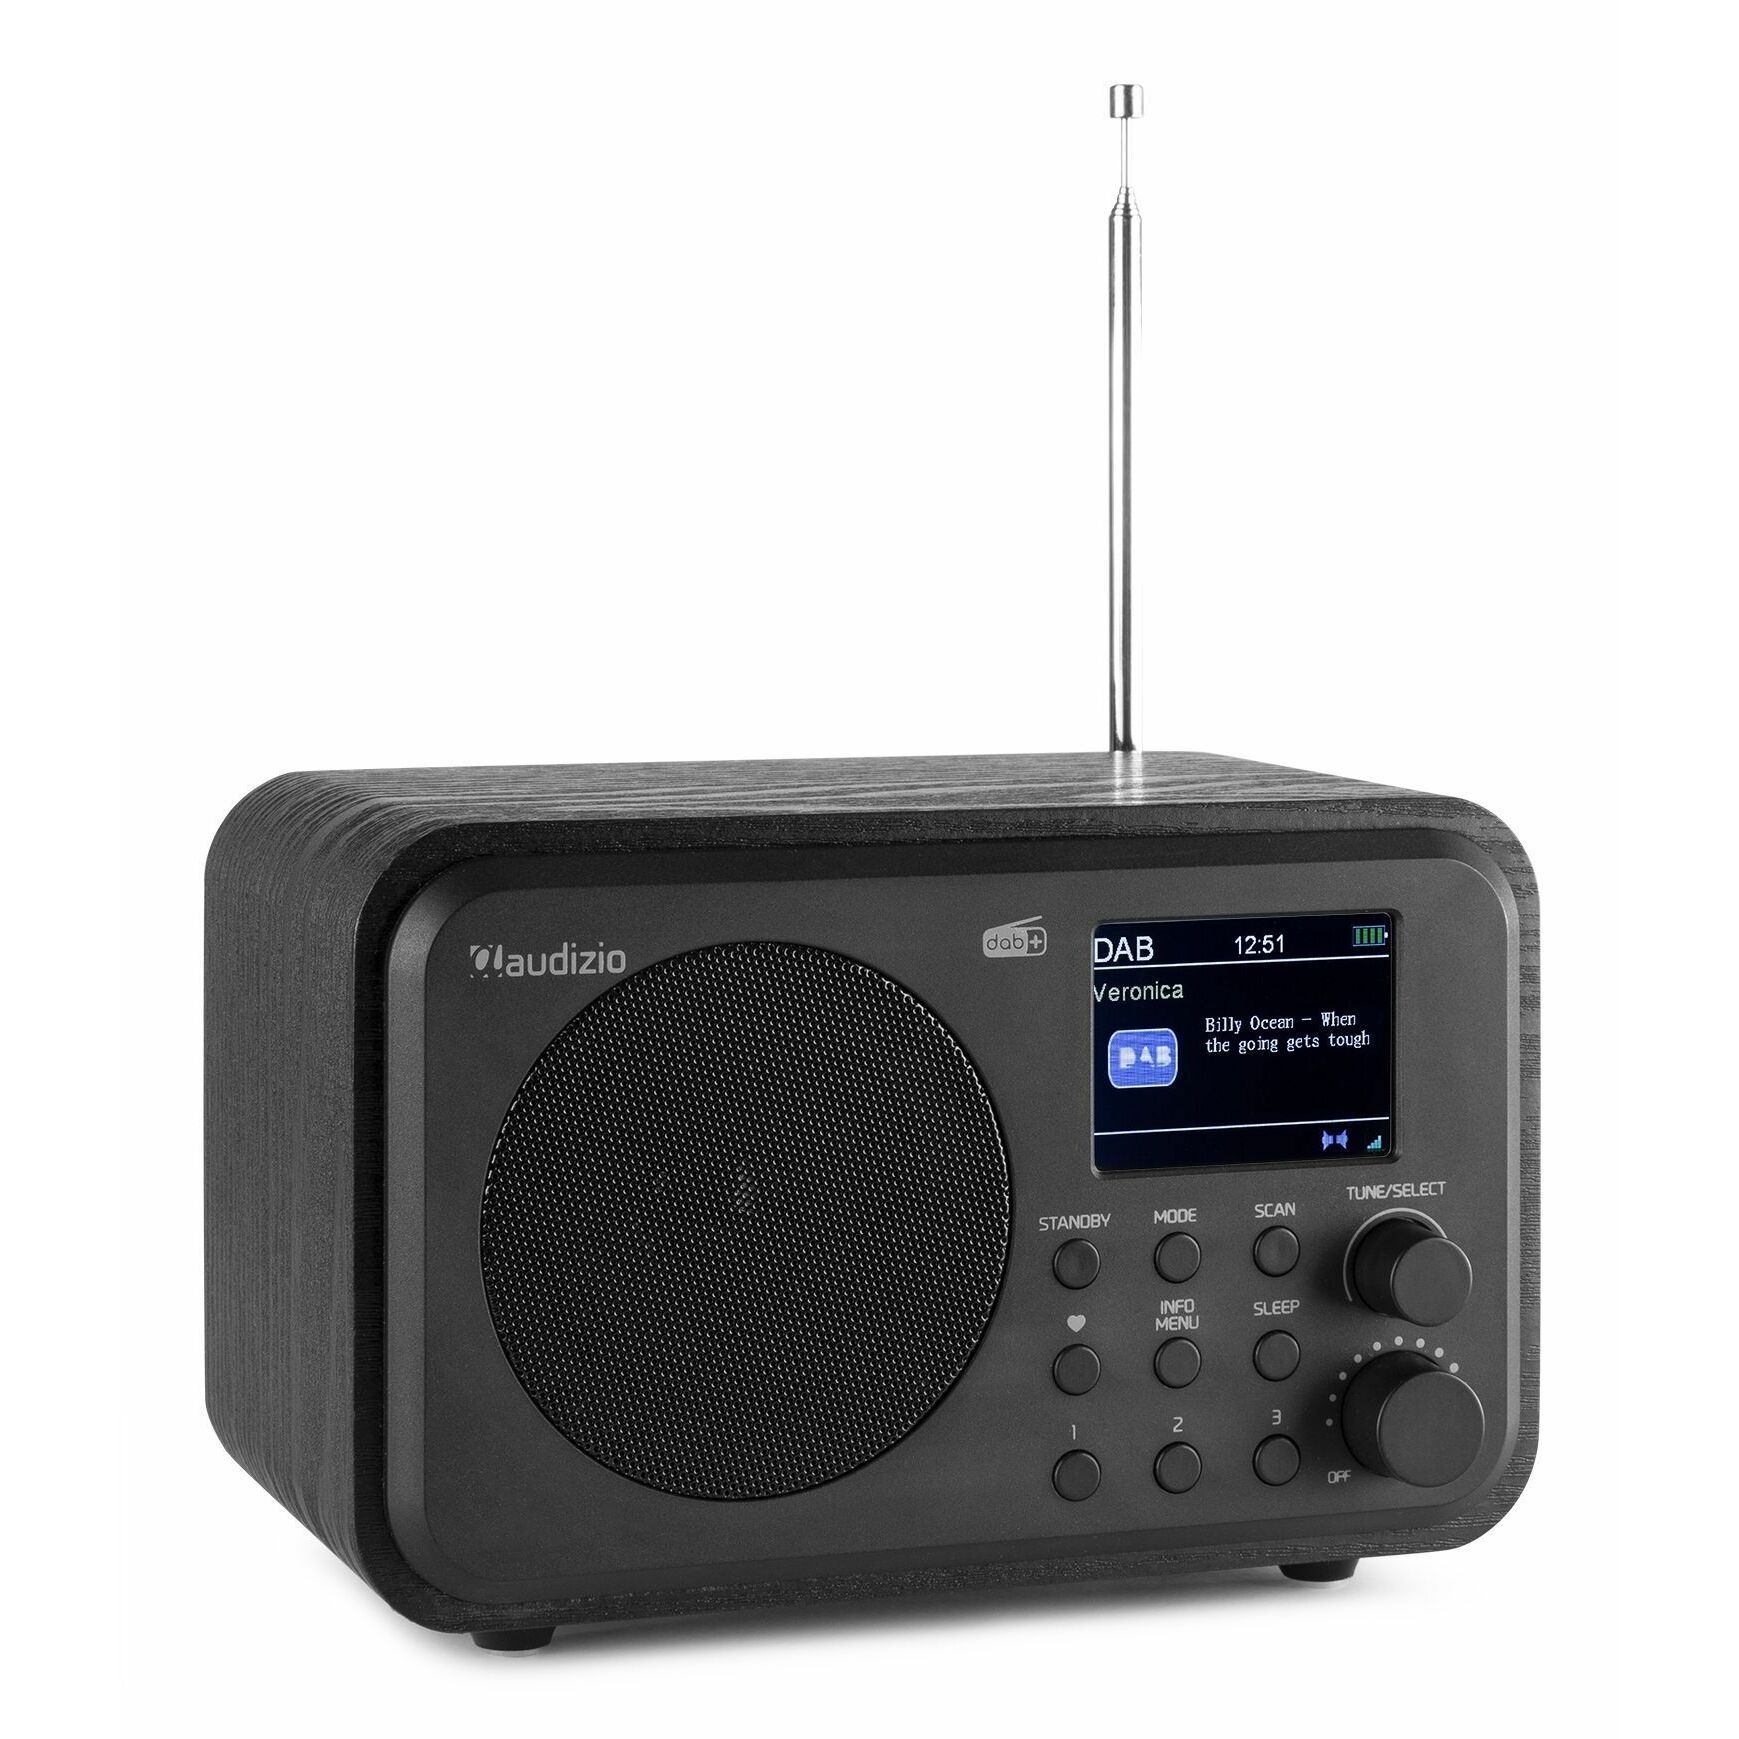 Audizio Retourdeal -  Milan draagbare DAB radio met Bluetooth, FM radio